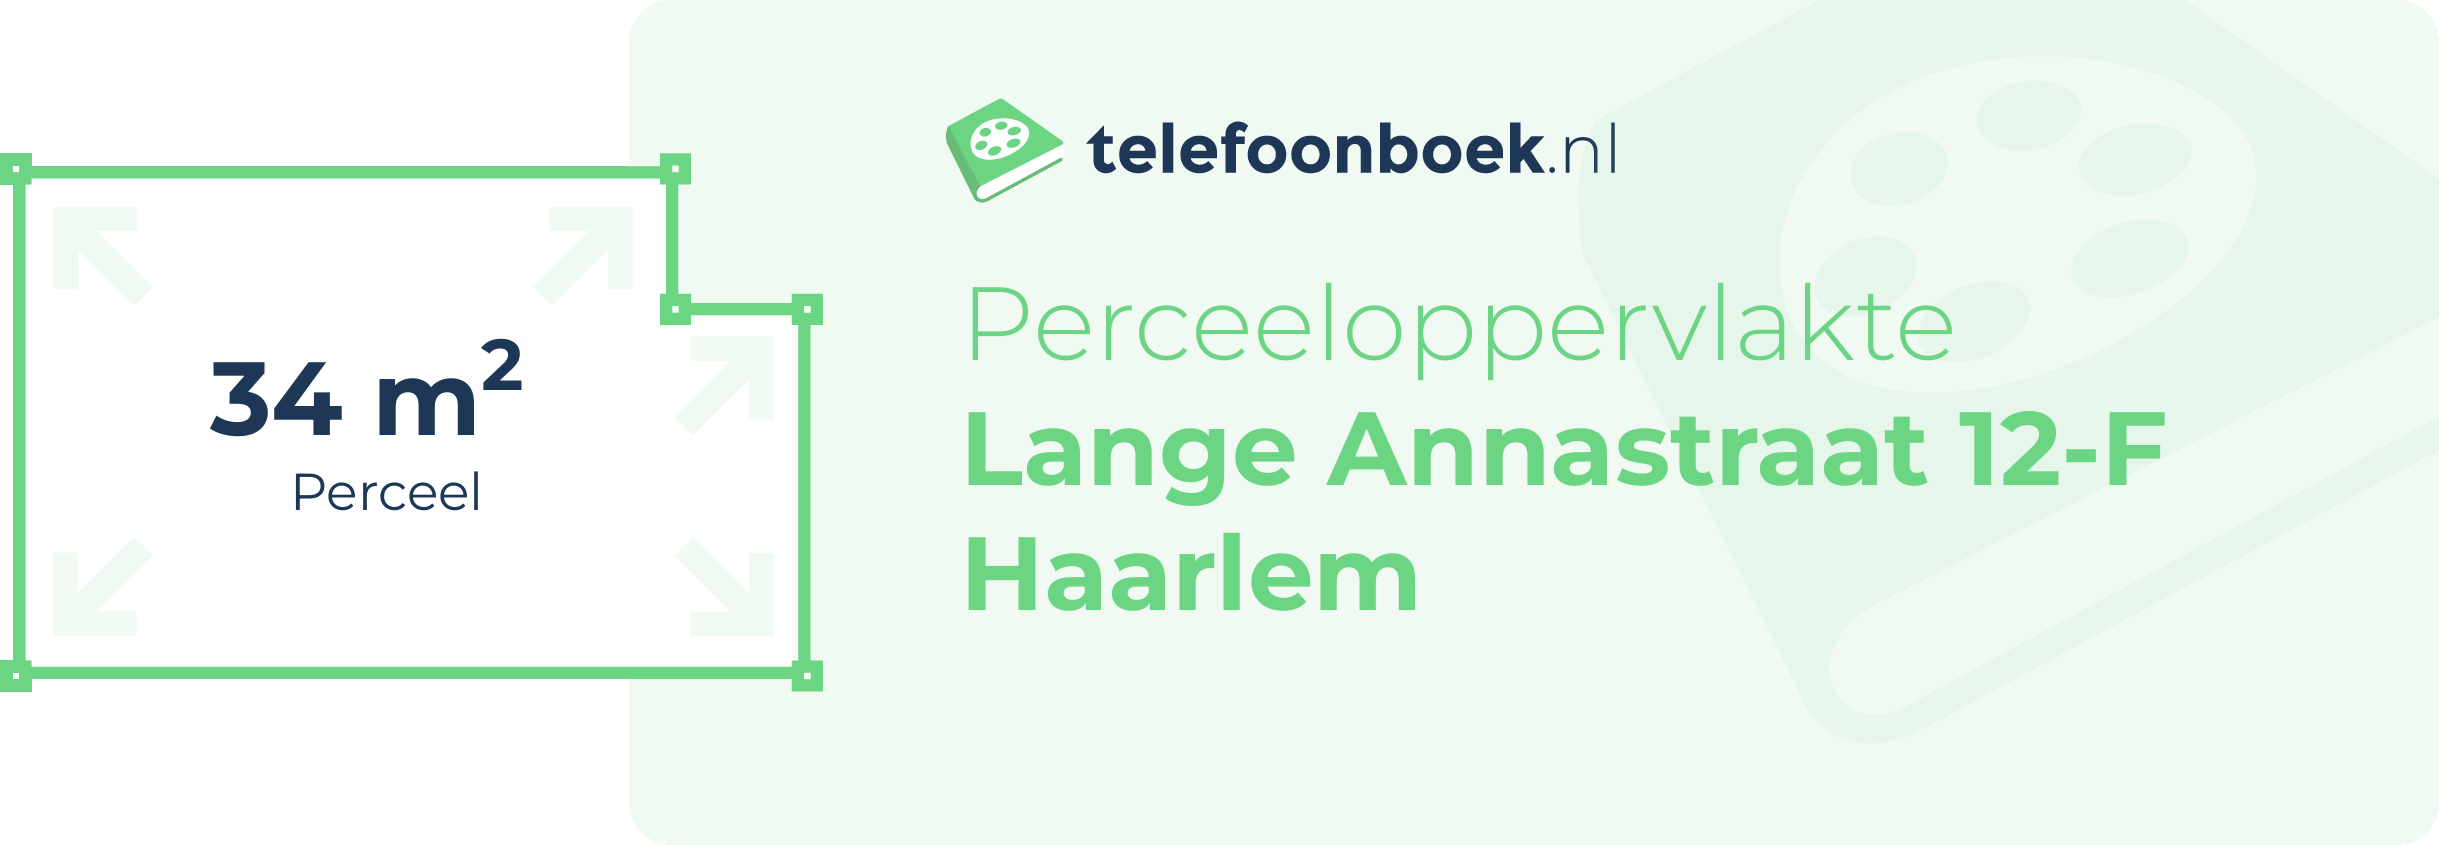 Perceeloppervlakte Lange Annastraat 12-F Haarlem